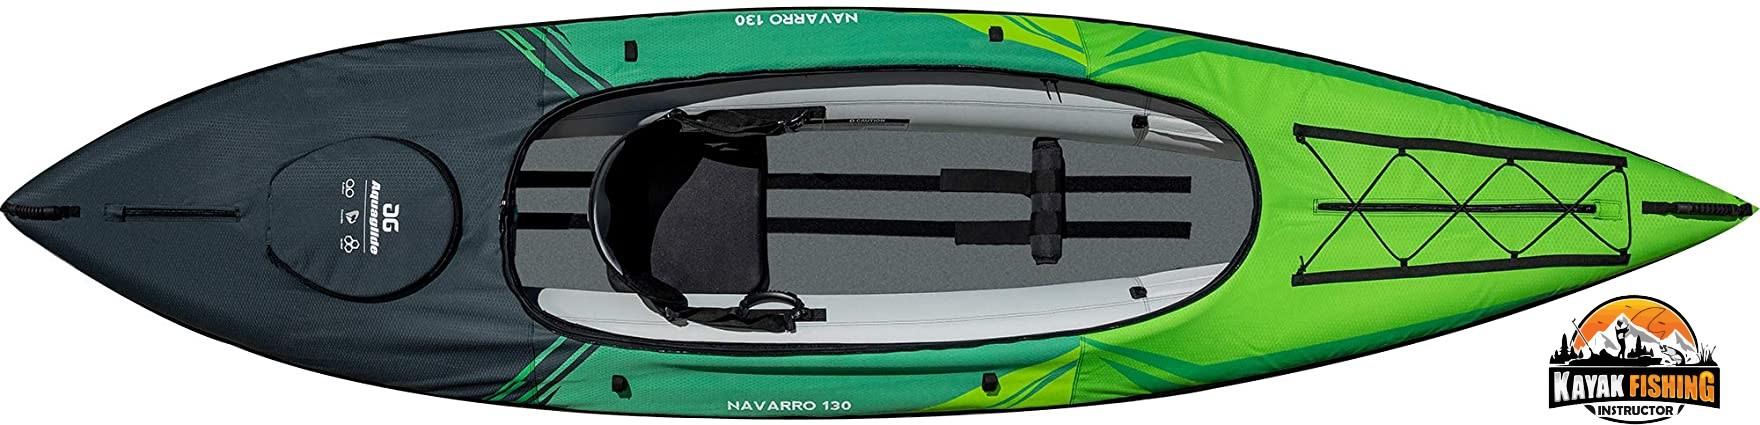 AQUAGLIDE Navarro 130 Convertible Inflatable Kayak with Drop Stitch Floor